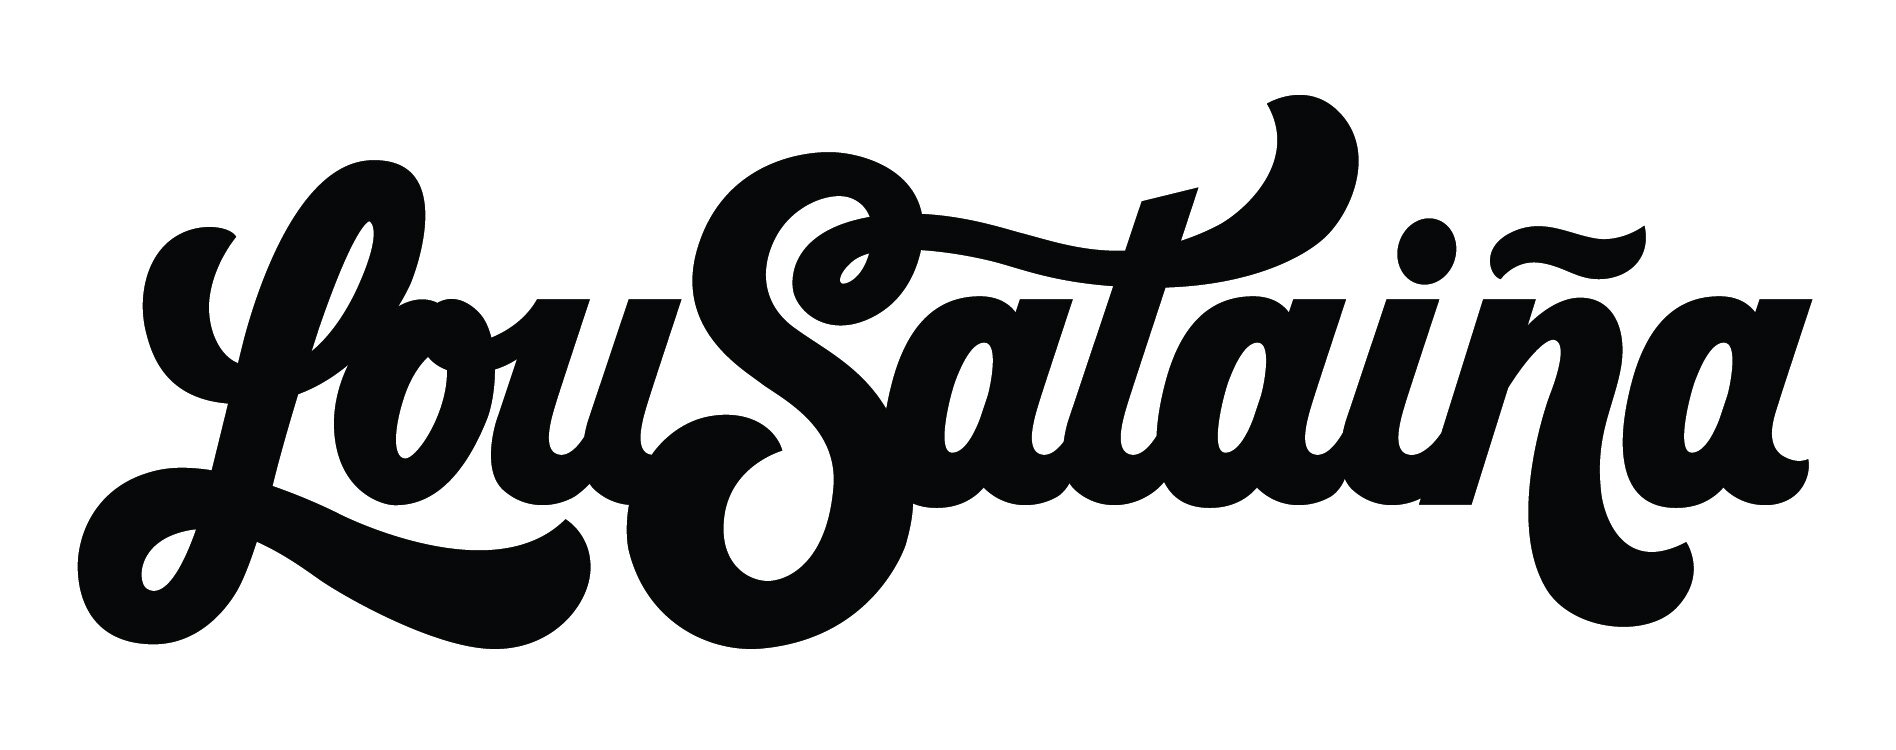 Lou Sataina Logo-Black-01.jpg